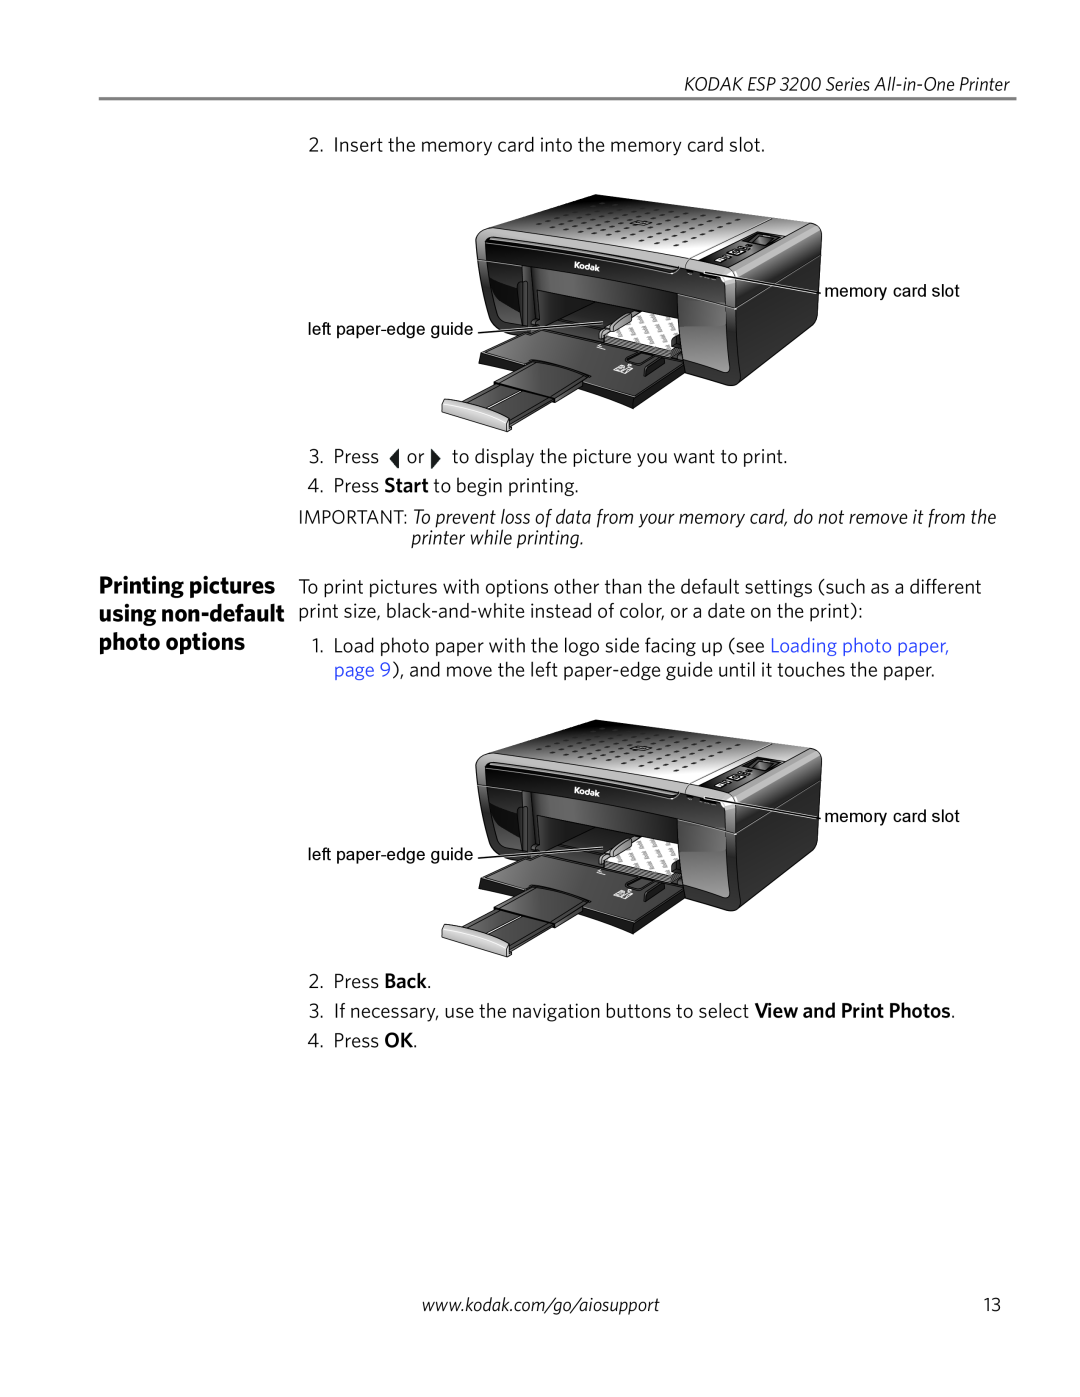 Kodak ESP 3200 Series, ESP 3260, ESP 3250 manual Printing pictures using non-default photo options 